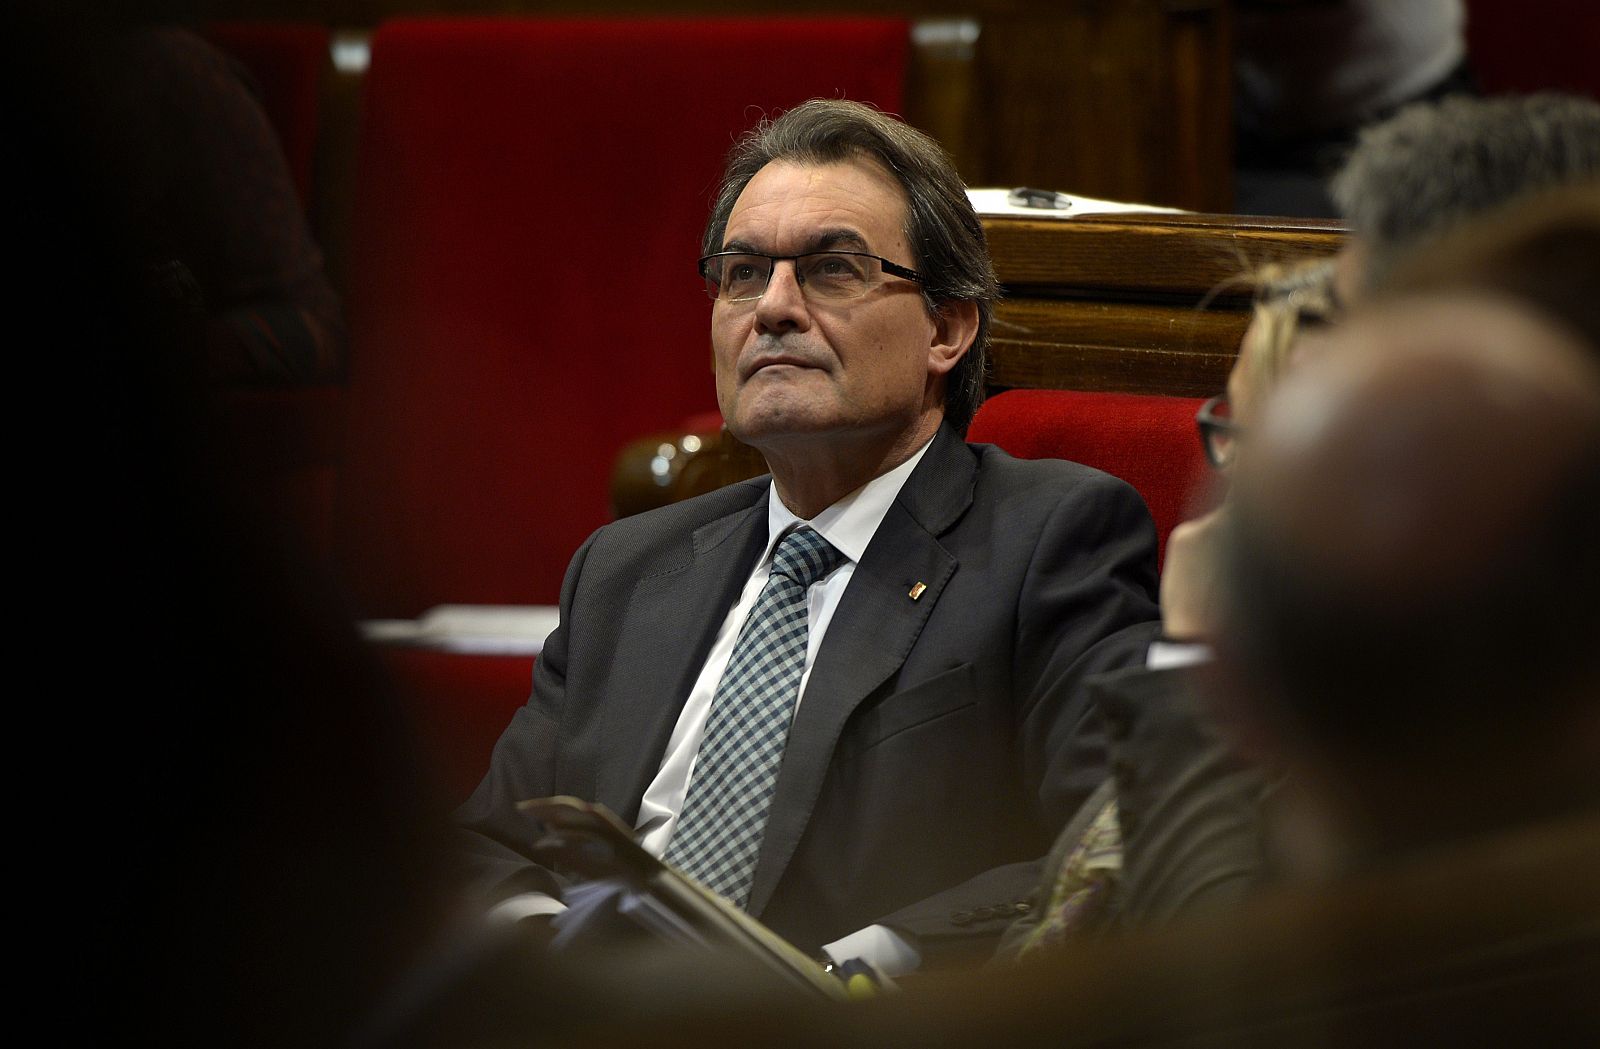 El presidente de la Generalitat, Artur Mas, en el Parlament